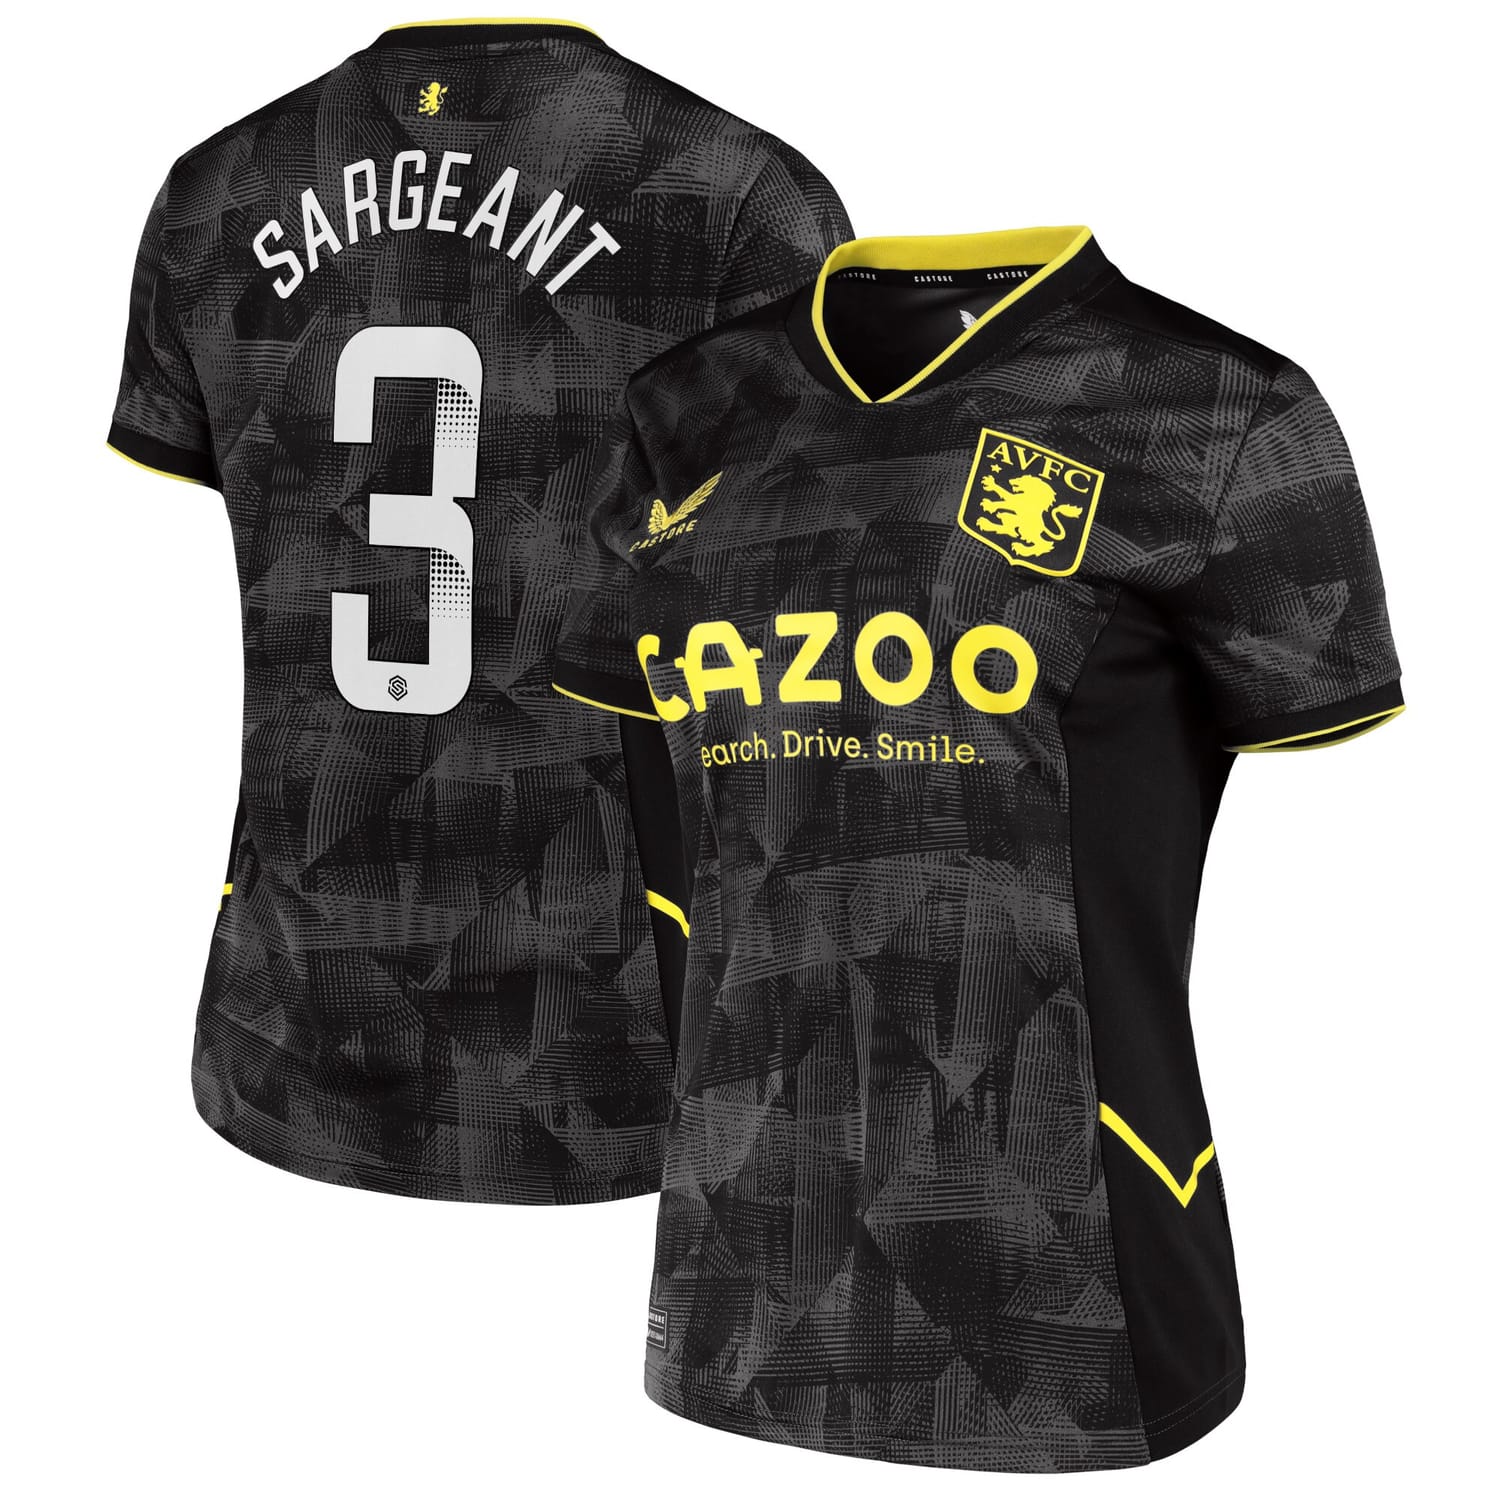 Premier League Aston Villa Third WSL Jersey Shirt 2022-23 player Meaghan Sargeant 3 printing for Women